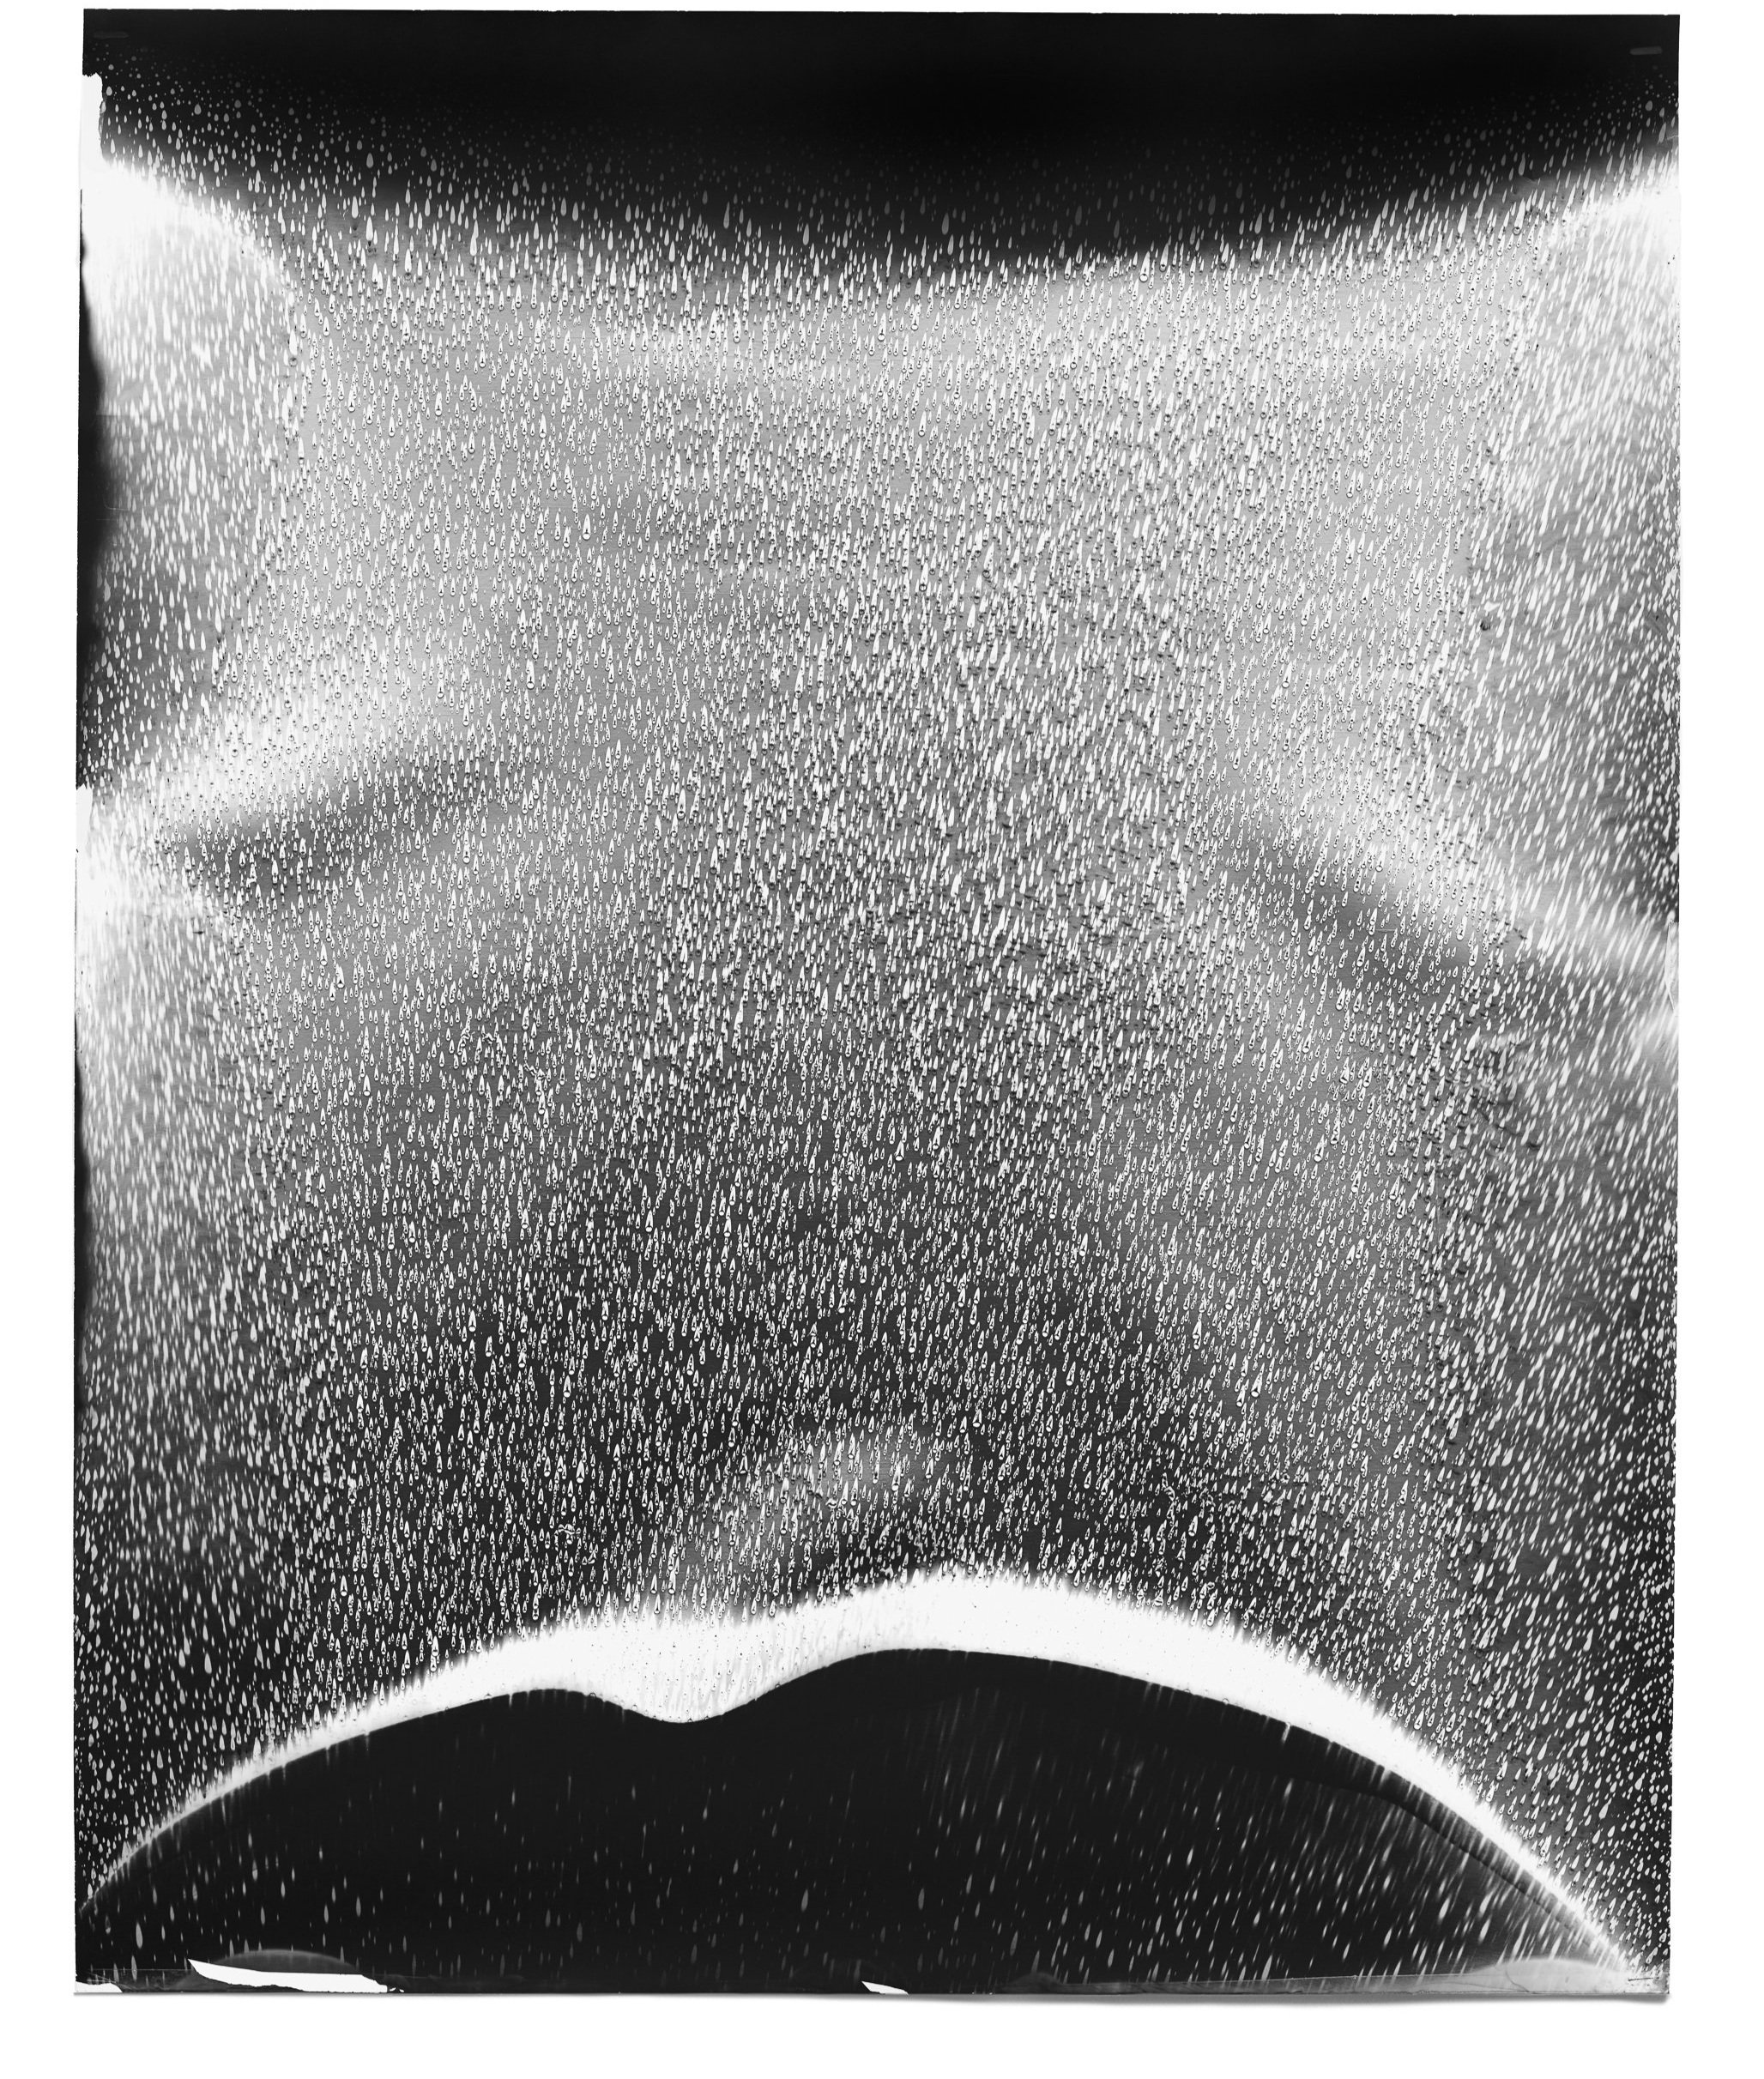   Rainstorm 24,  2015 Silver gelatin photogram 42 x 34 in 